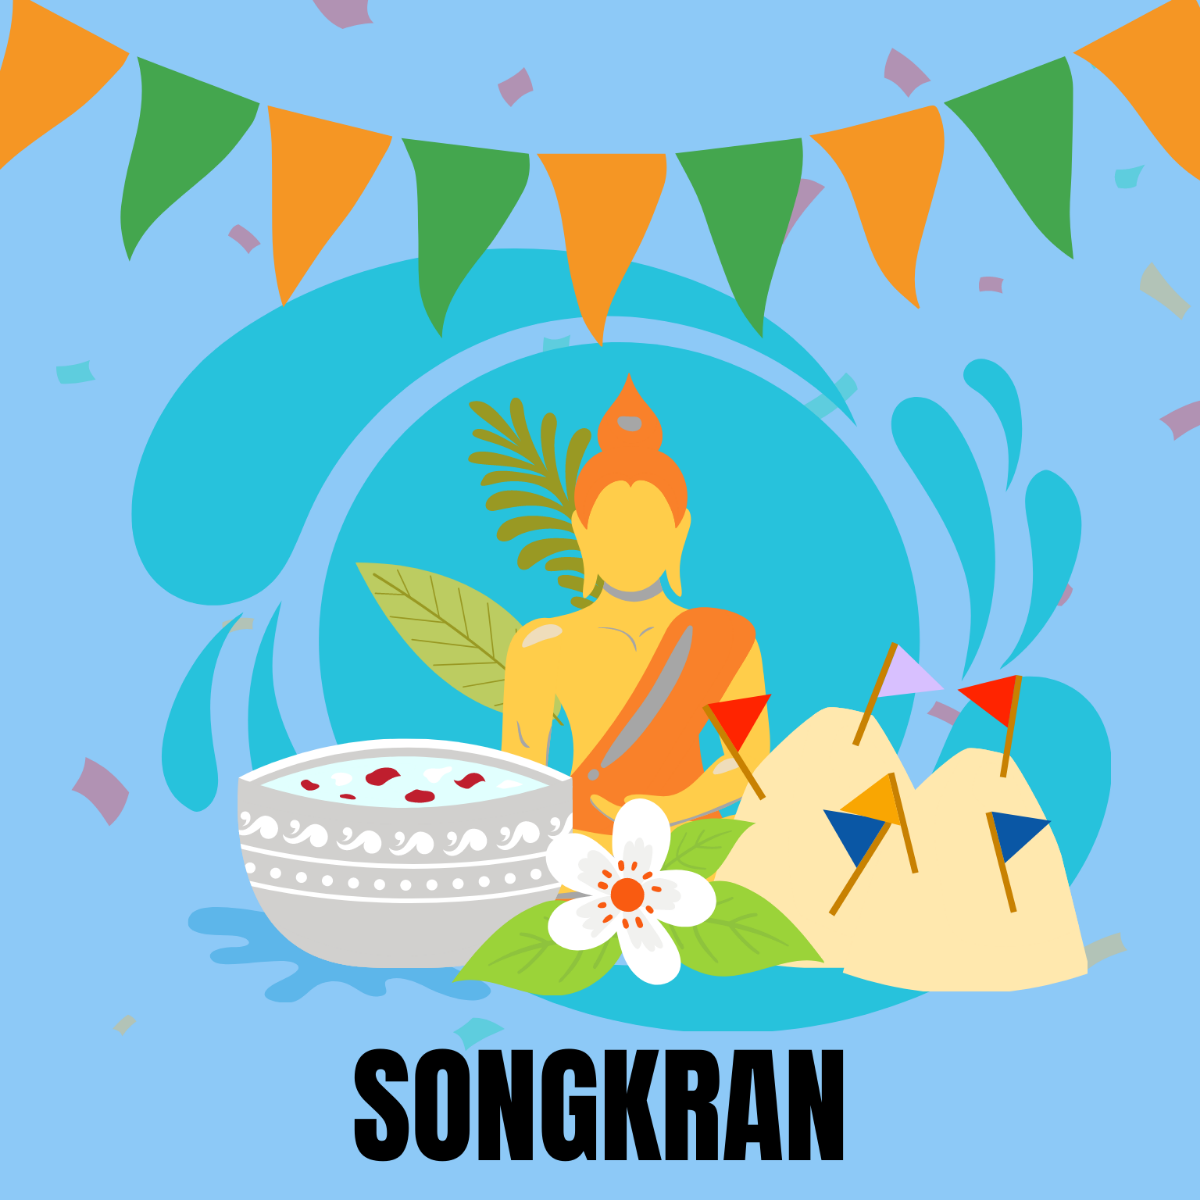 Free Songkran Image Template